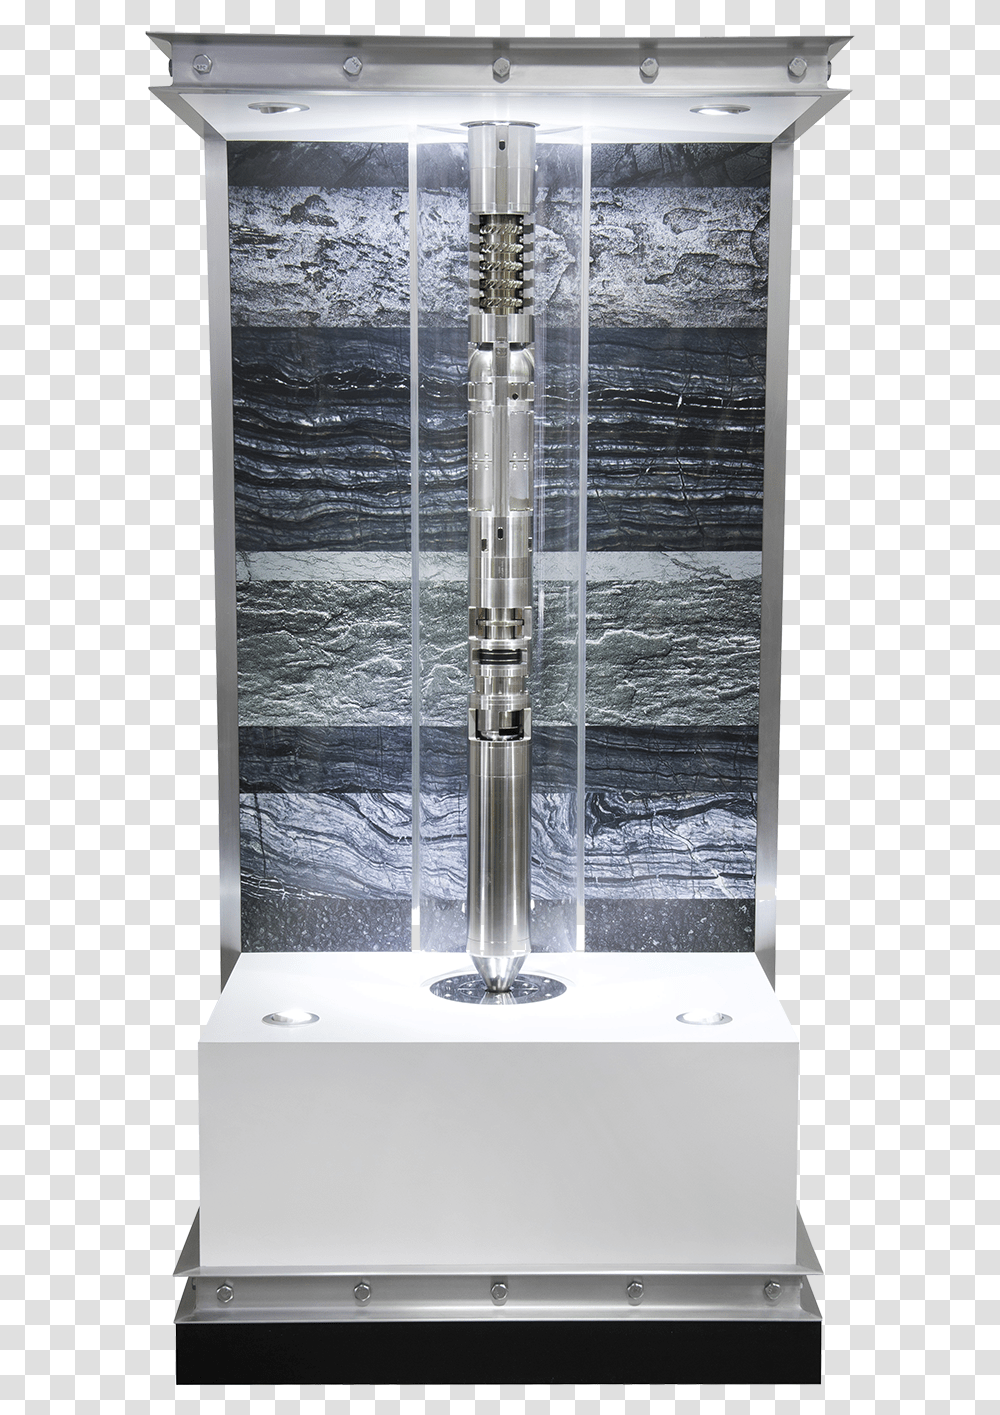 New Artificial Lift Technology, Sink Faucet, Machine, Shower Faucet Transparent Png